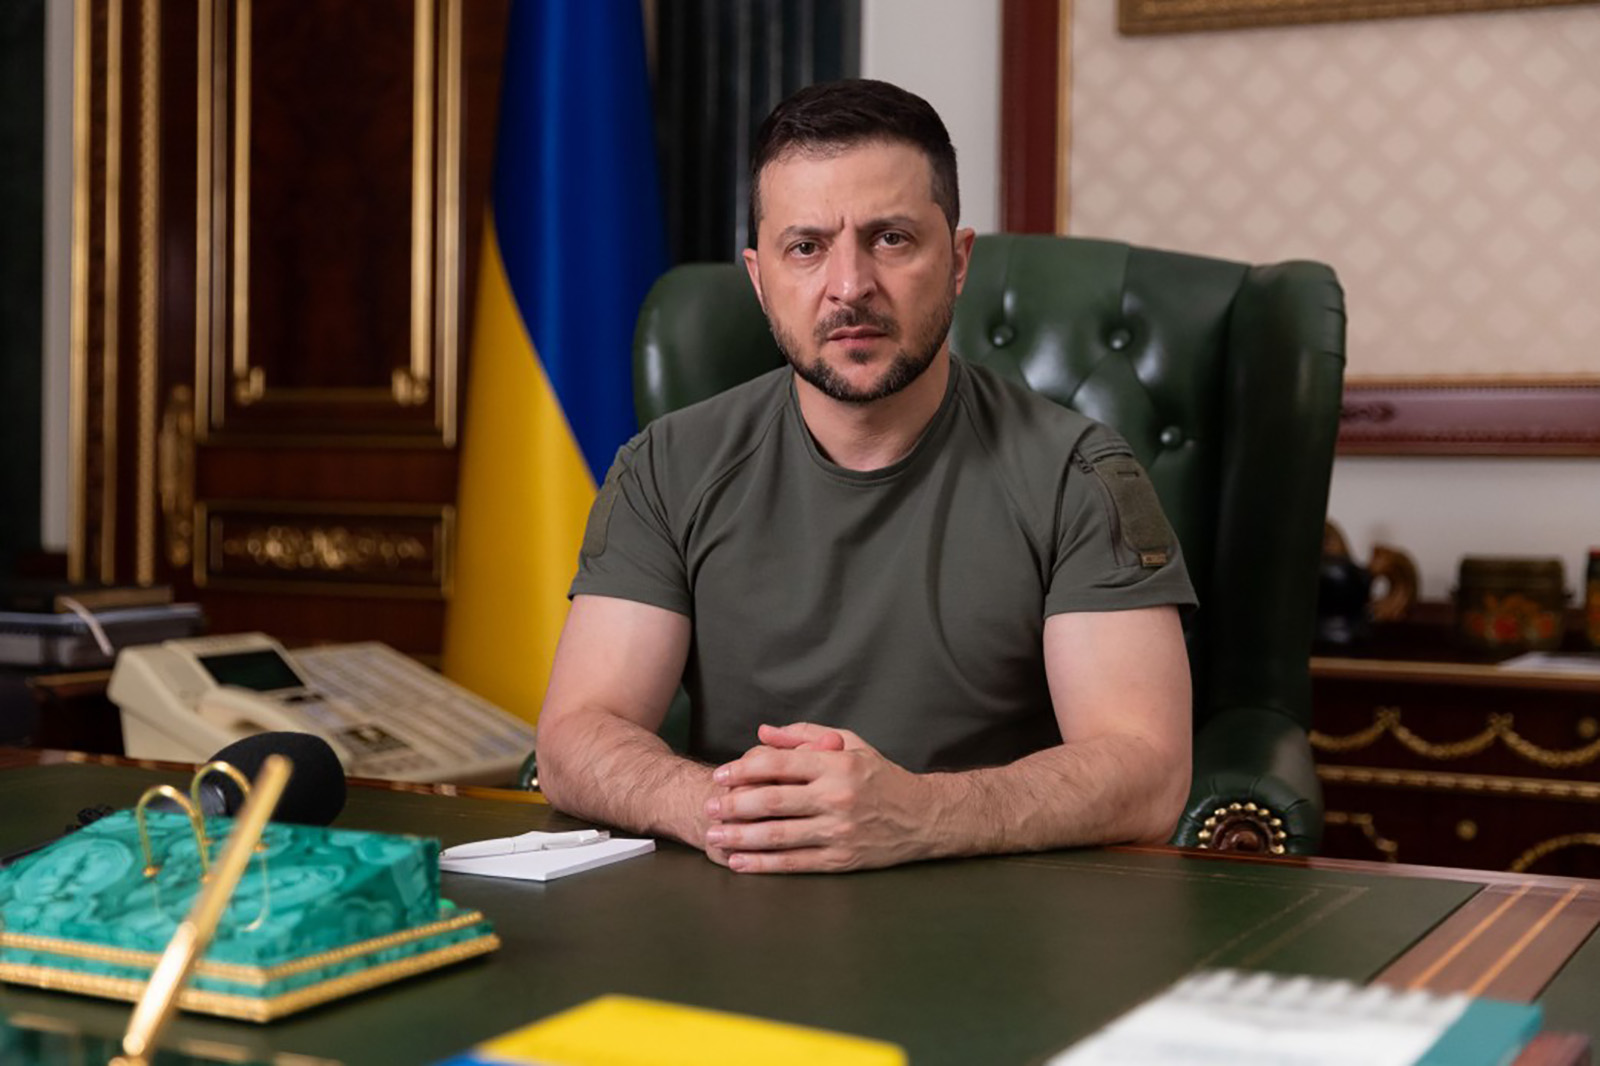 Ukrainian President Volodymyr Zelensky in his office in Kyiv, Ukraine.